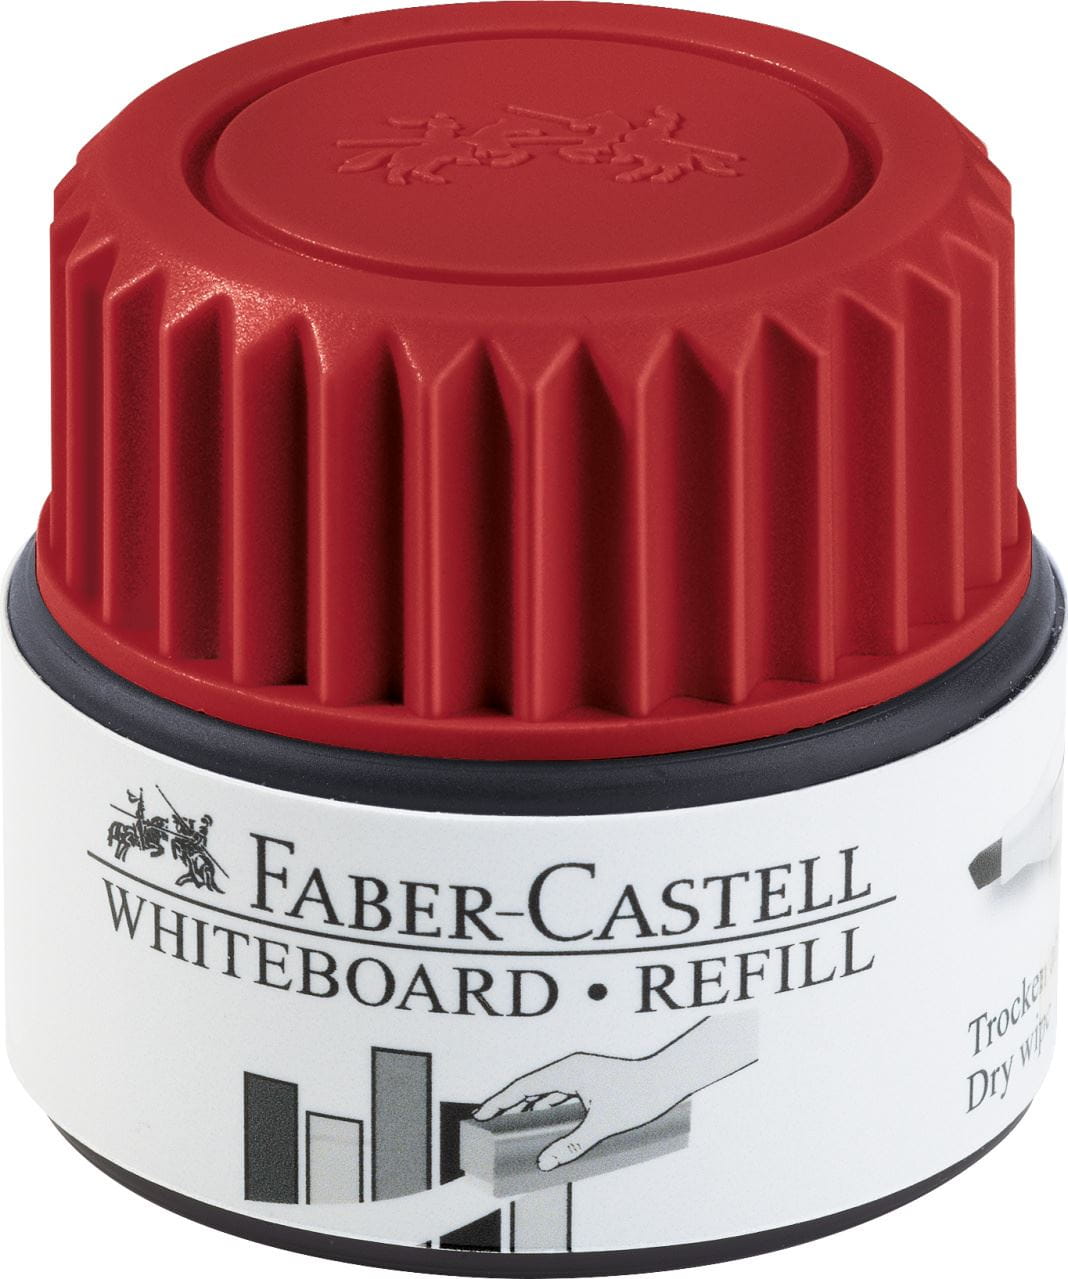 Faber-Castell - Encrier recharge tableau blanc 1584 rouge